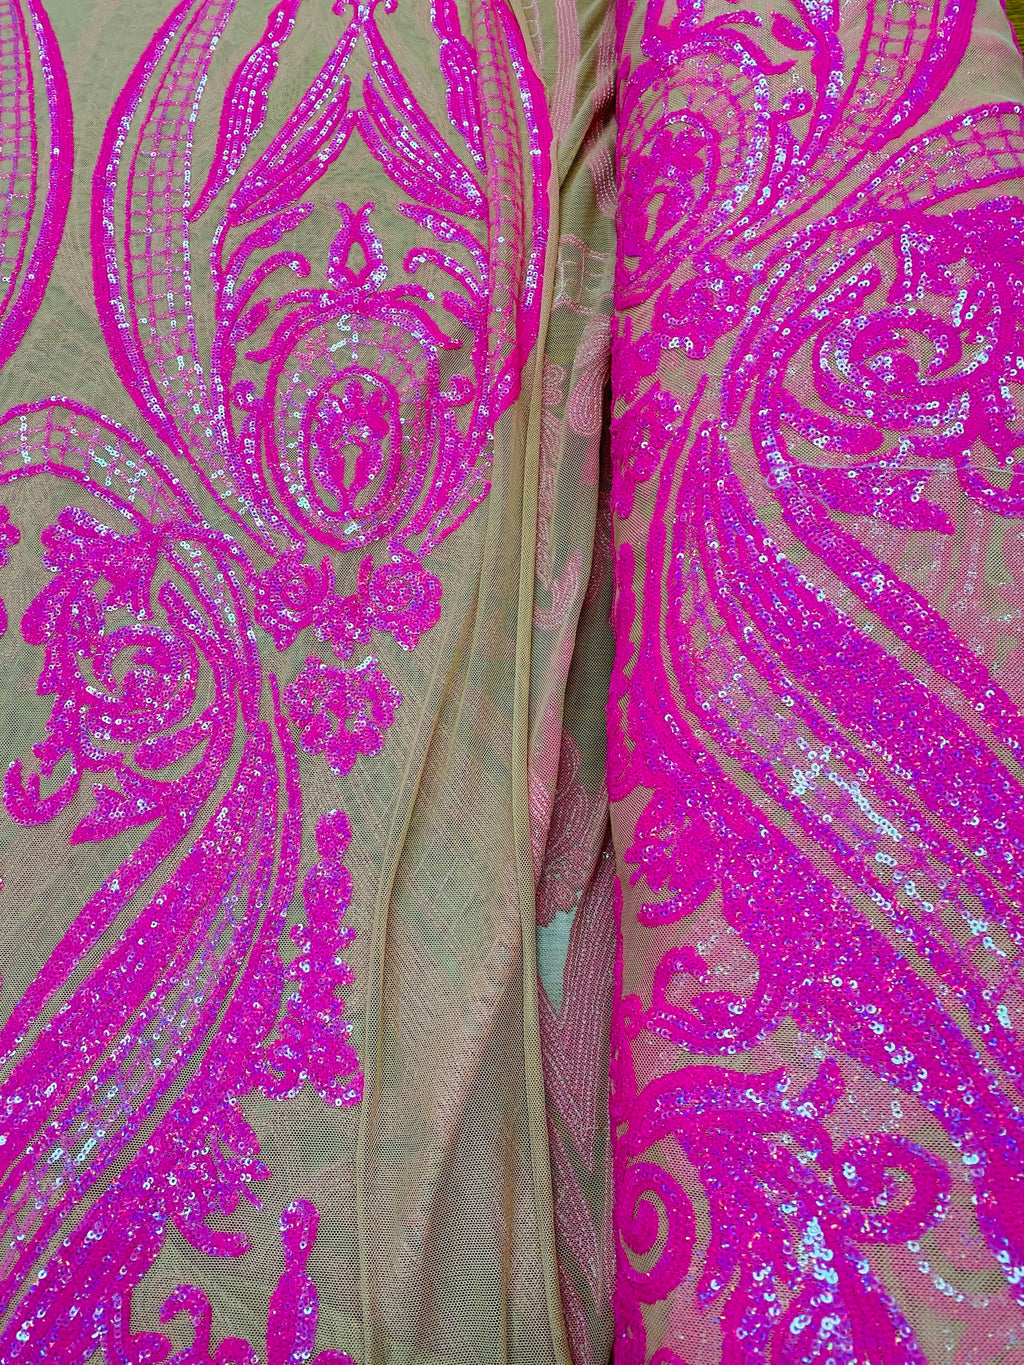 Neon Pink Sequins Fabric, Skin Mesh - Damask Design 4 Way Stretch Sequ